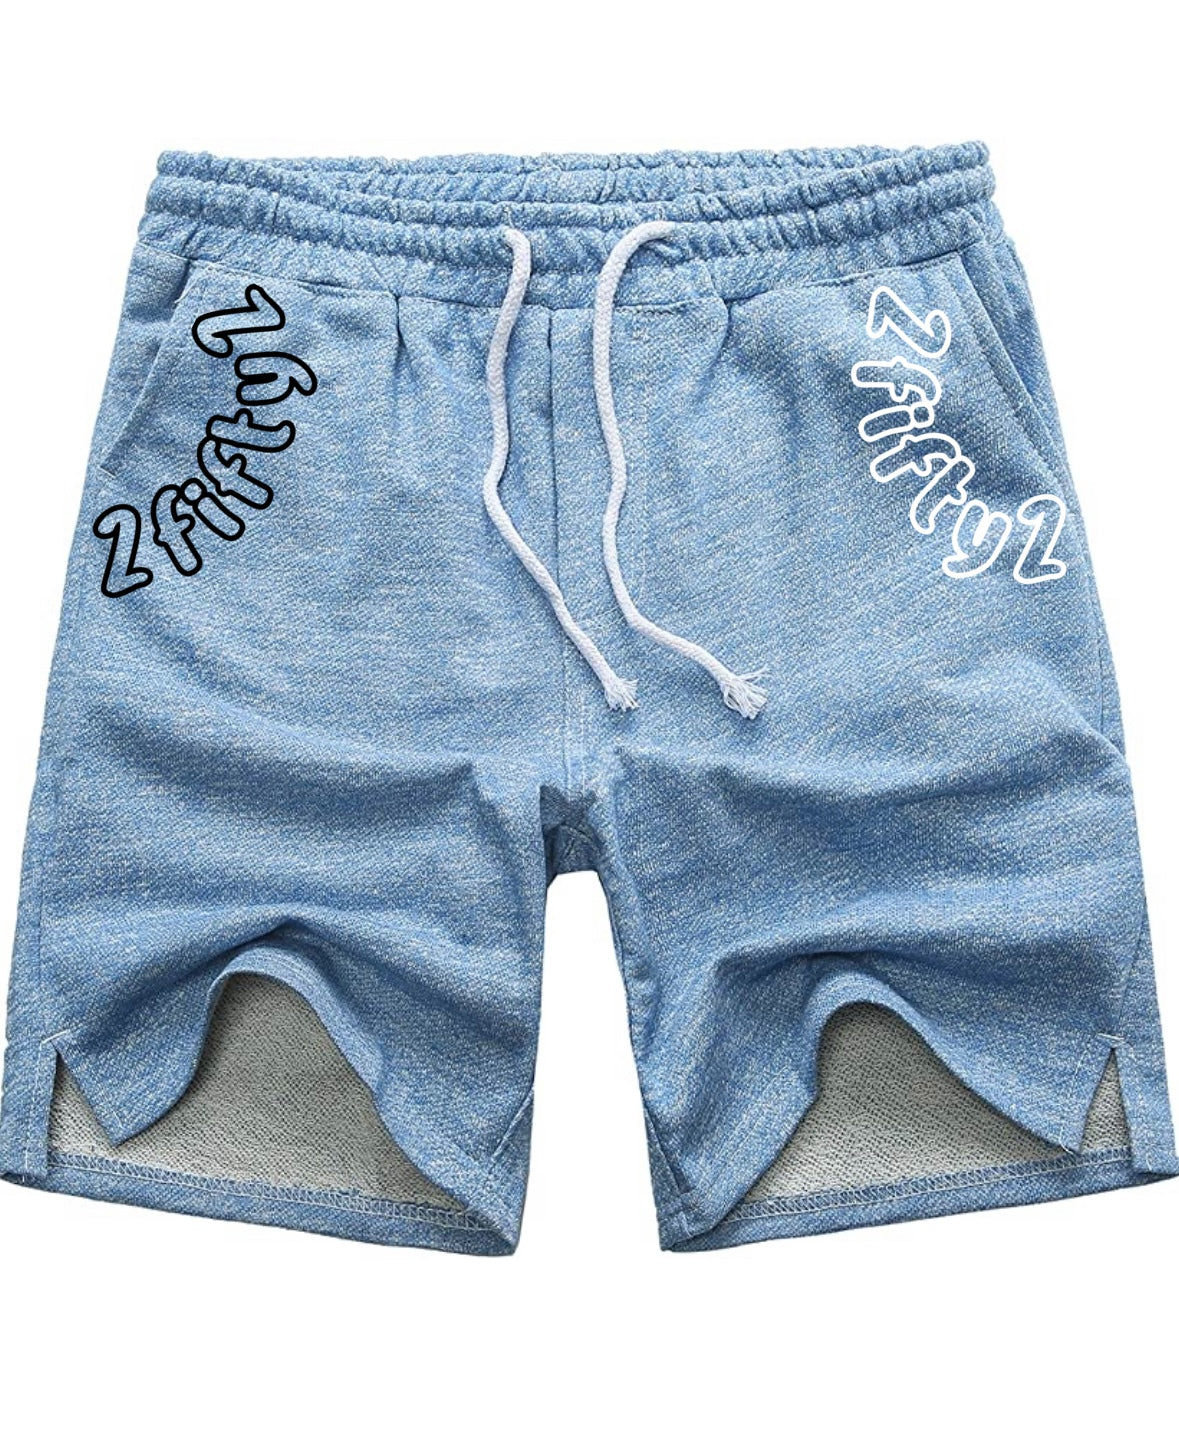 Men’s fleece sweat shorts